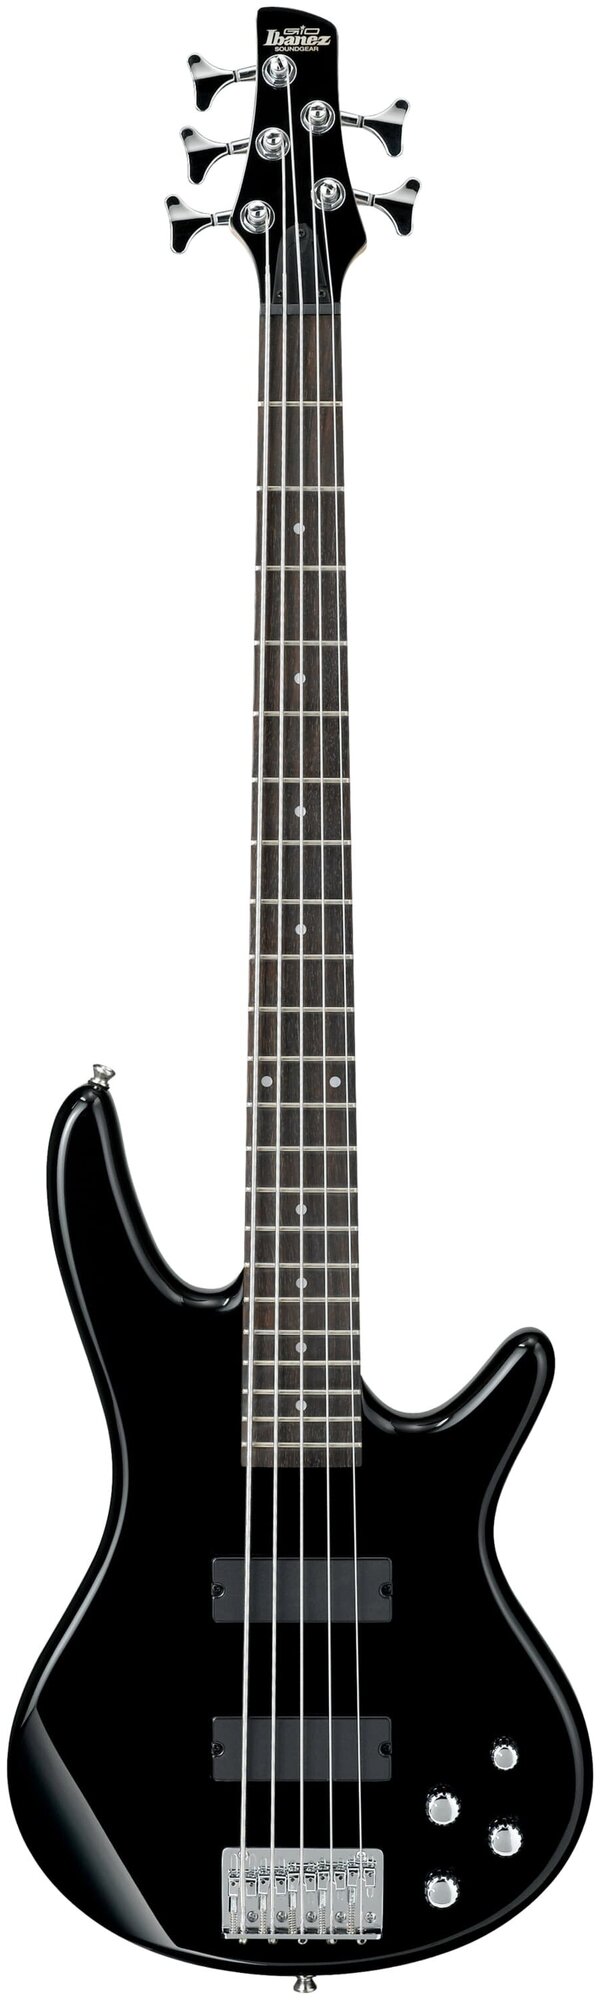 Ibanez GSR205-BK 5-струнная бас-гитара